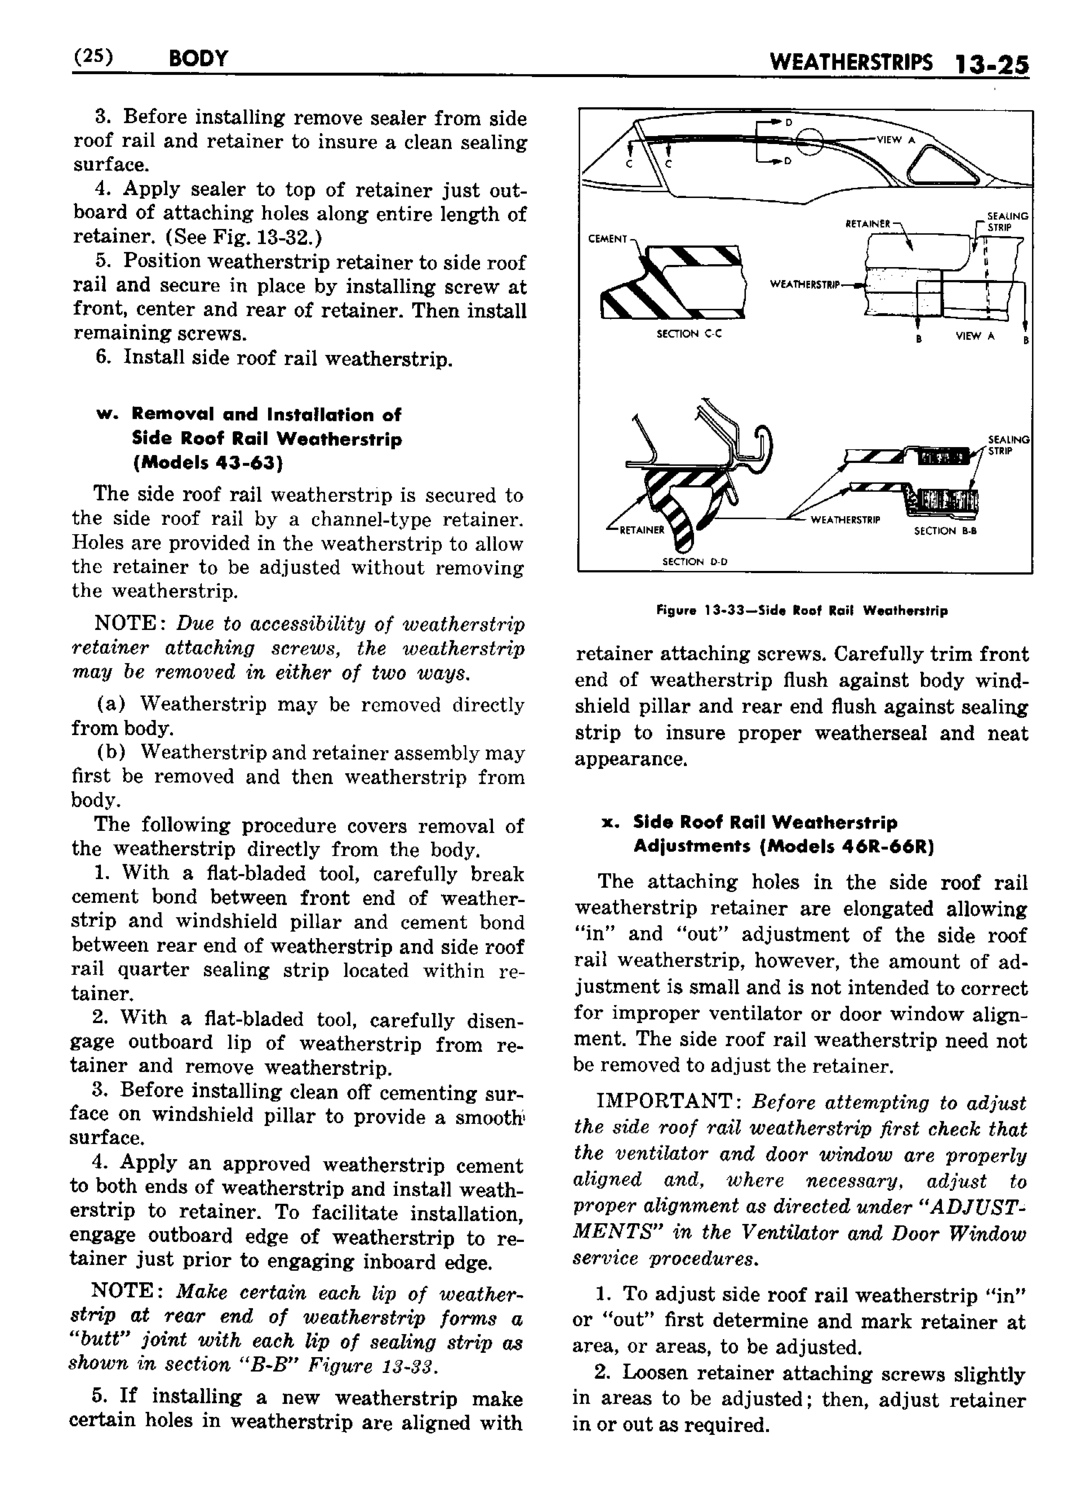 n_1958 Buick Body Service Manual-026-026.jpg